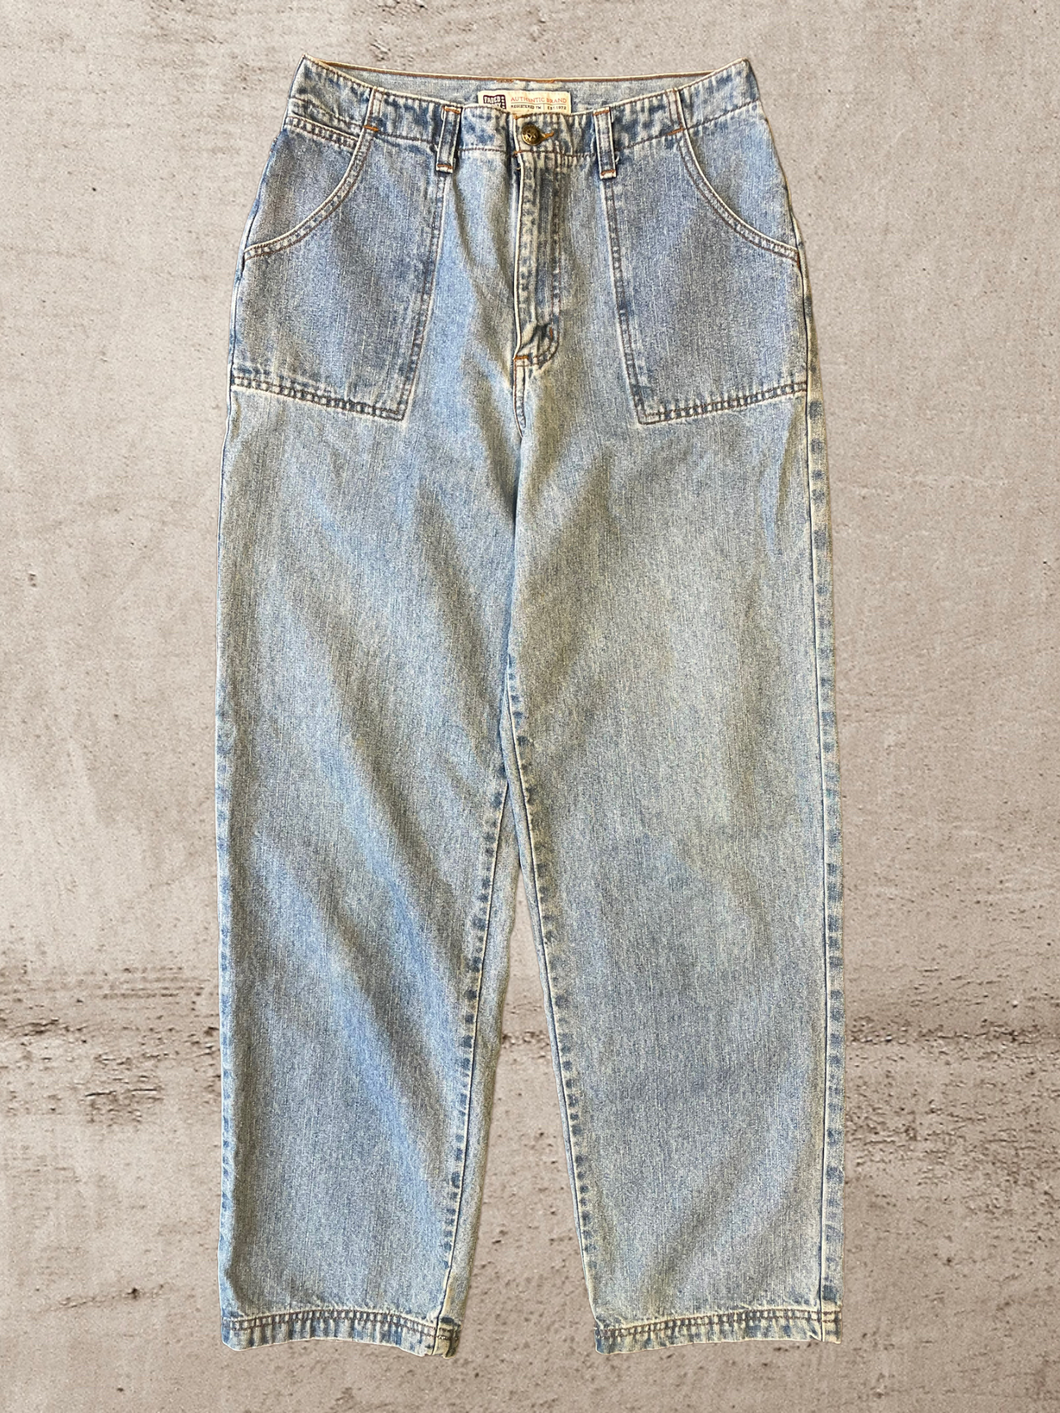 90s Fatigue Light Wash Baggy Jeans - 31x30